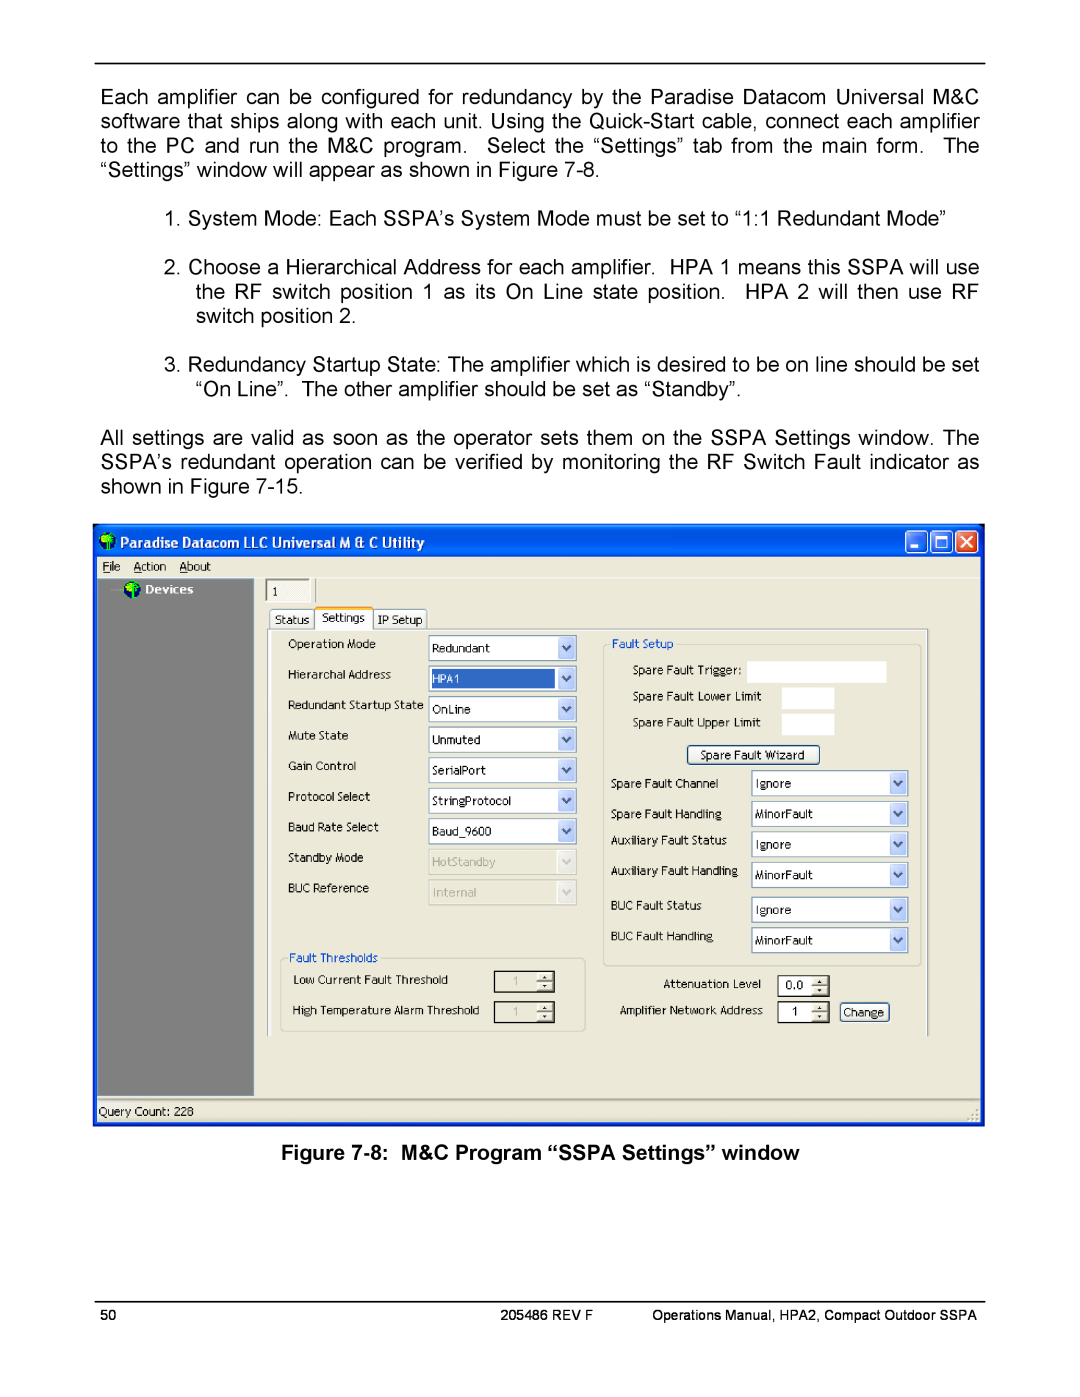 Paradise 205486 REV F manual 8:M&C Program “SSPA Settings” window, Rev F, Operations Manual, HPA2, Compact Outdoor SSPA 